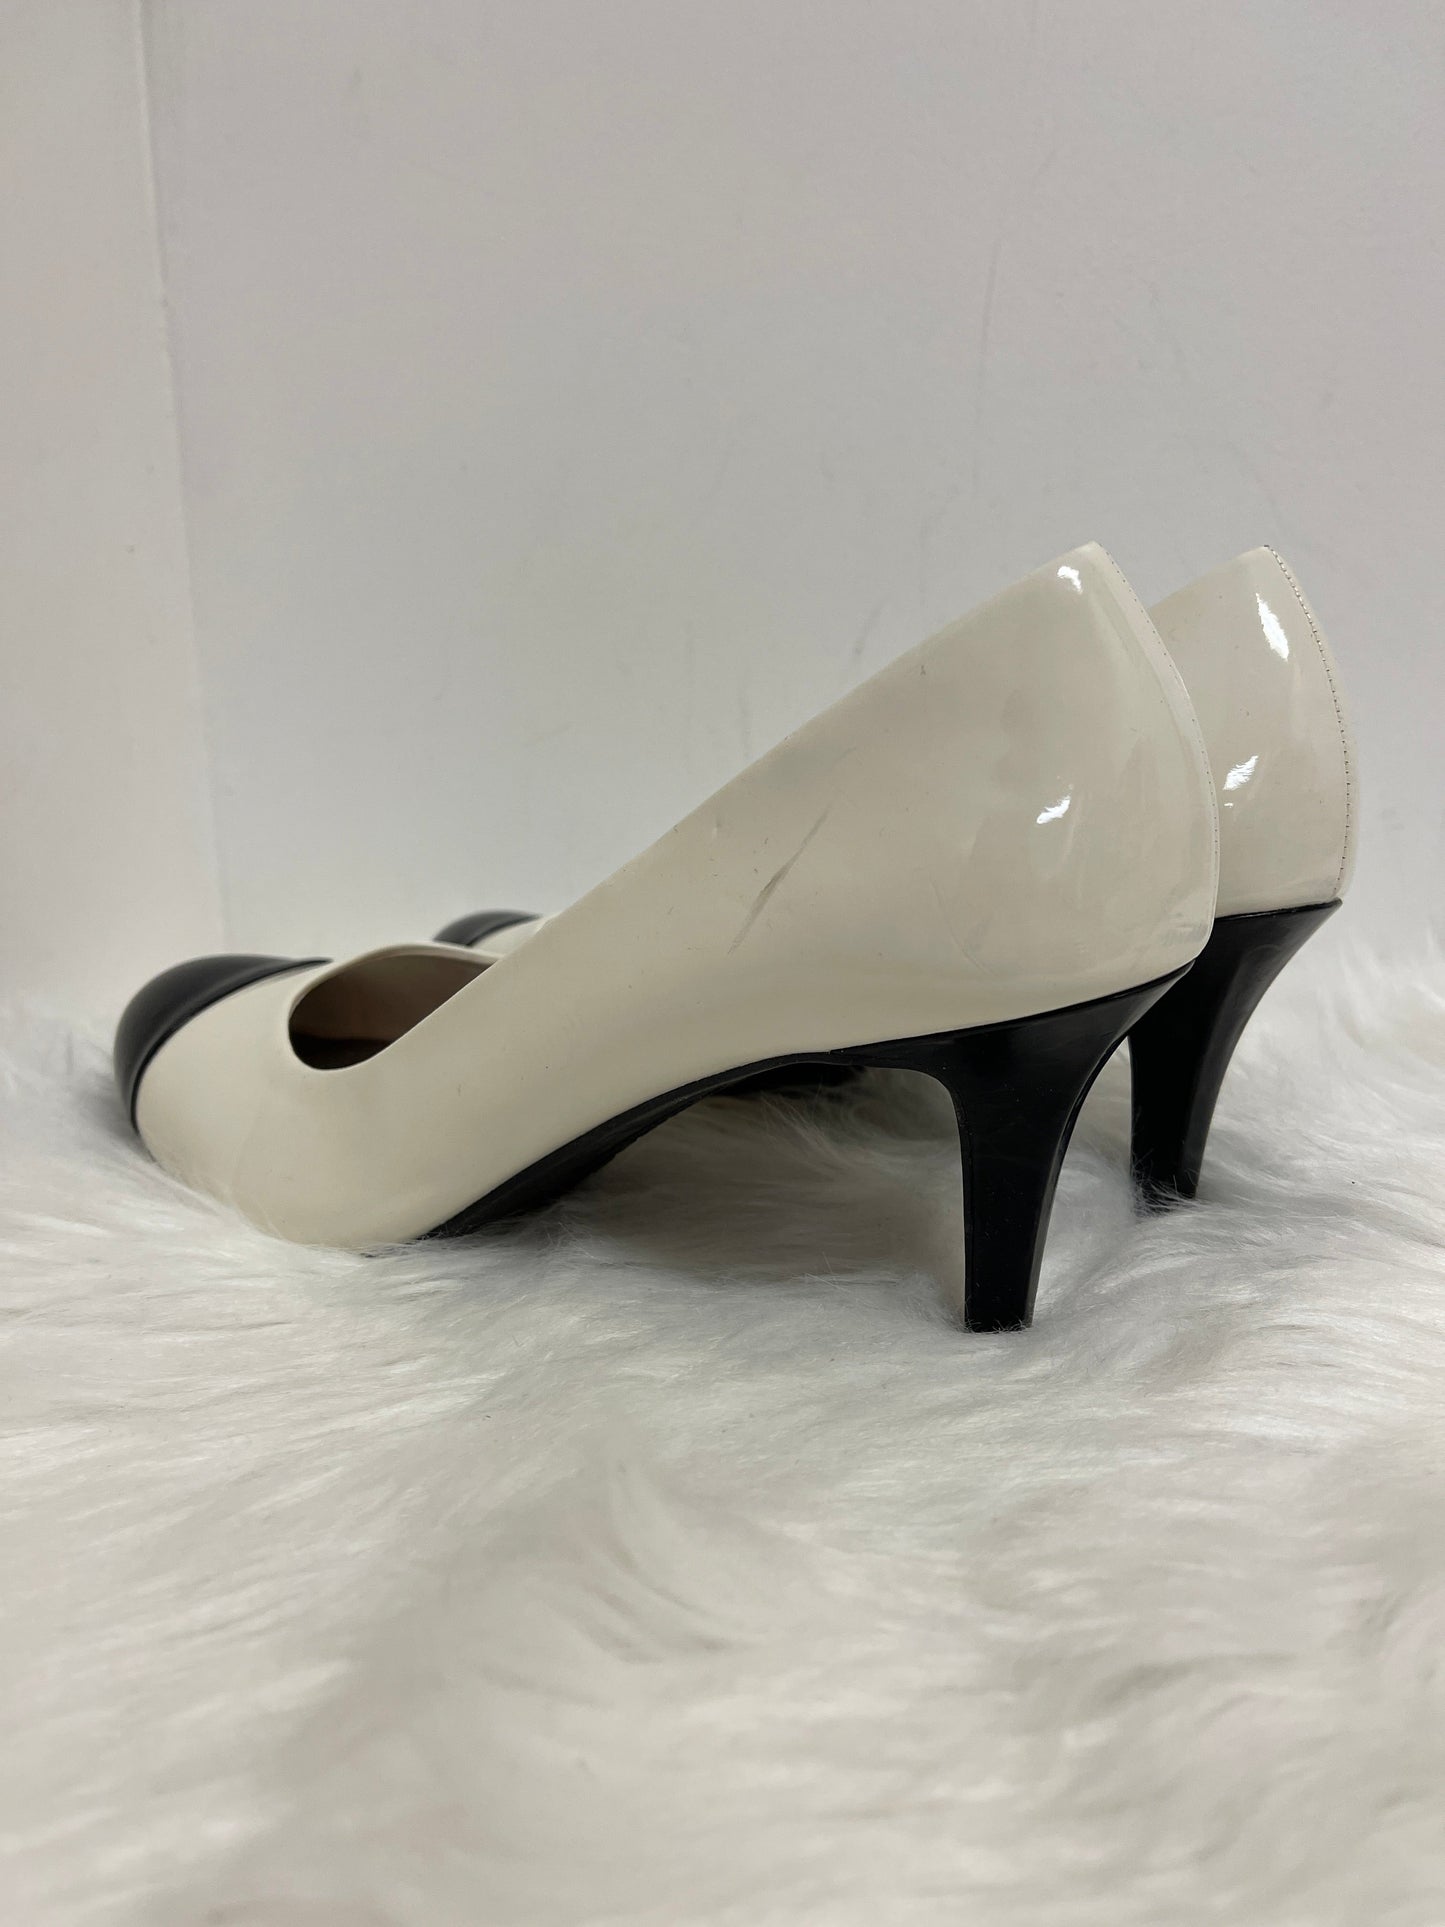 Black & Cream Shoes Heels Stiletto Predictions, Size 11